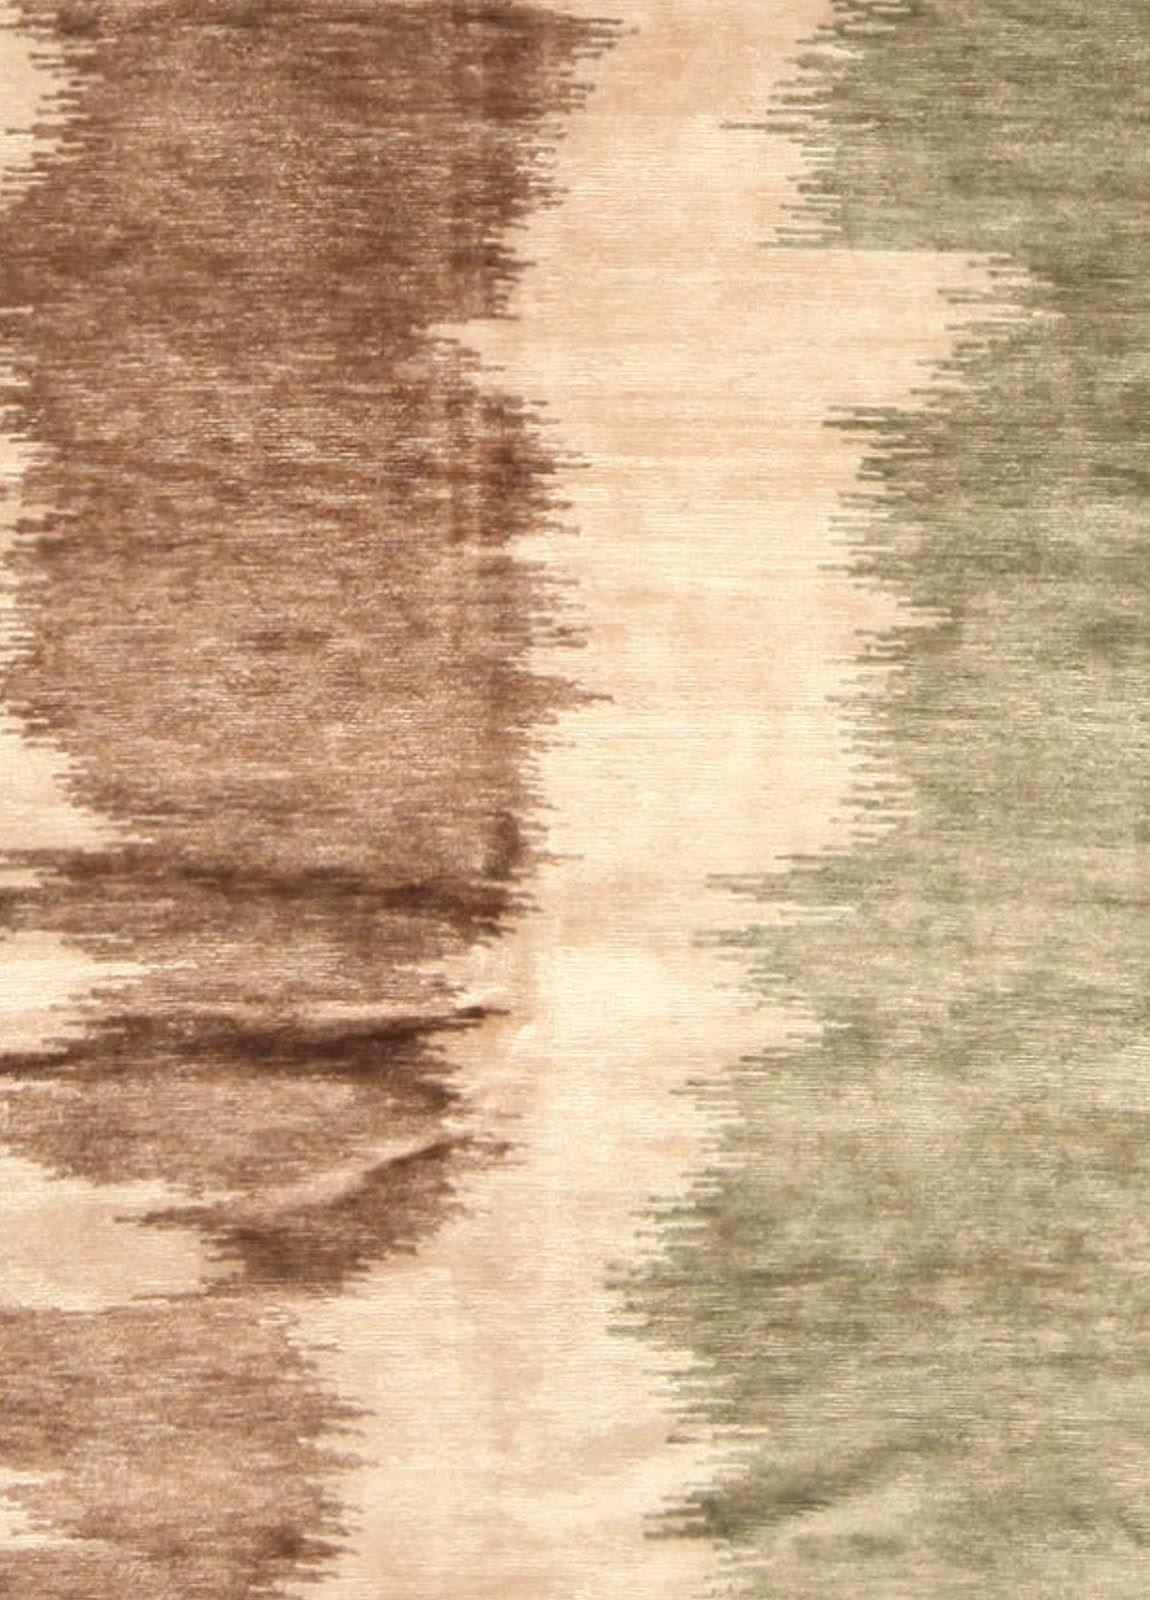 Contemporary abstract Mimosa design handmade silk rug by Doris Leslie Blau.
Size: 9'7